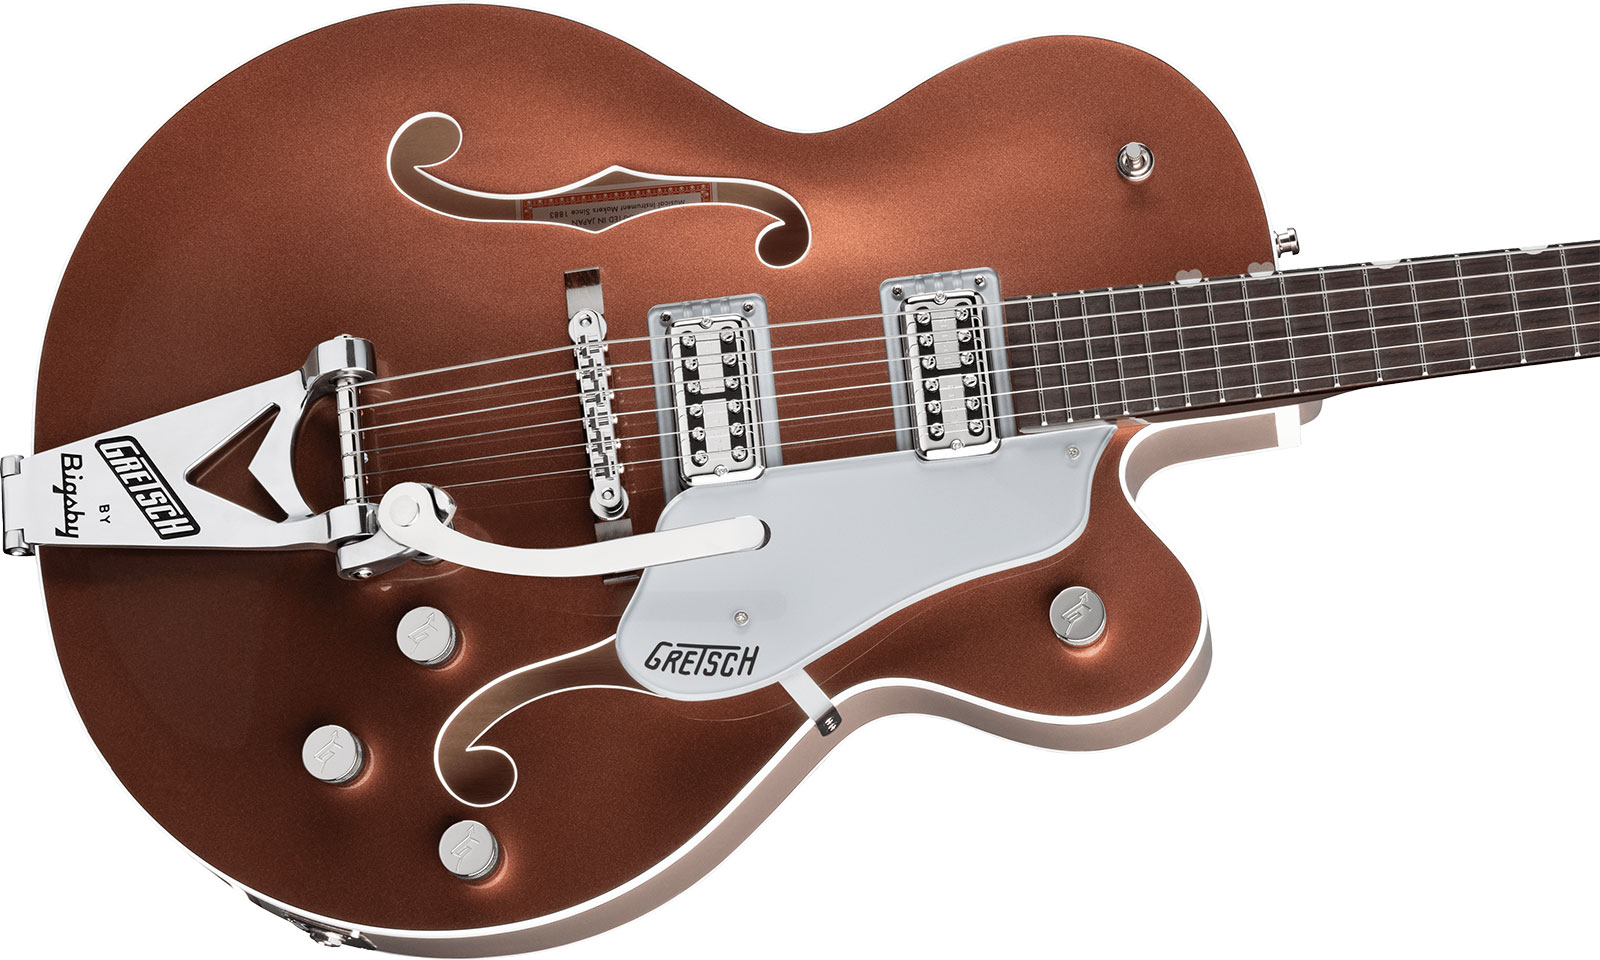 Gretsch G6118tg Players Edition Anniversary Nashville Pro Jap Bigsby Eb - 2-tone Copper/sahara Metallic - Semi hollow elektriche gitaar - Variation 2